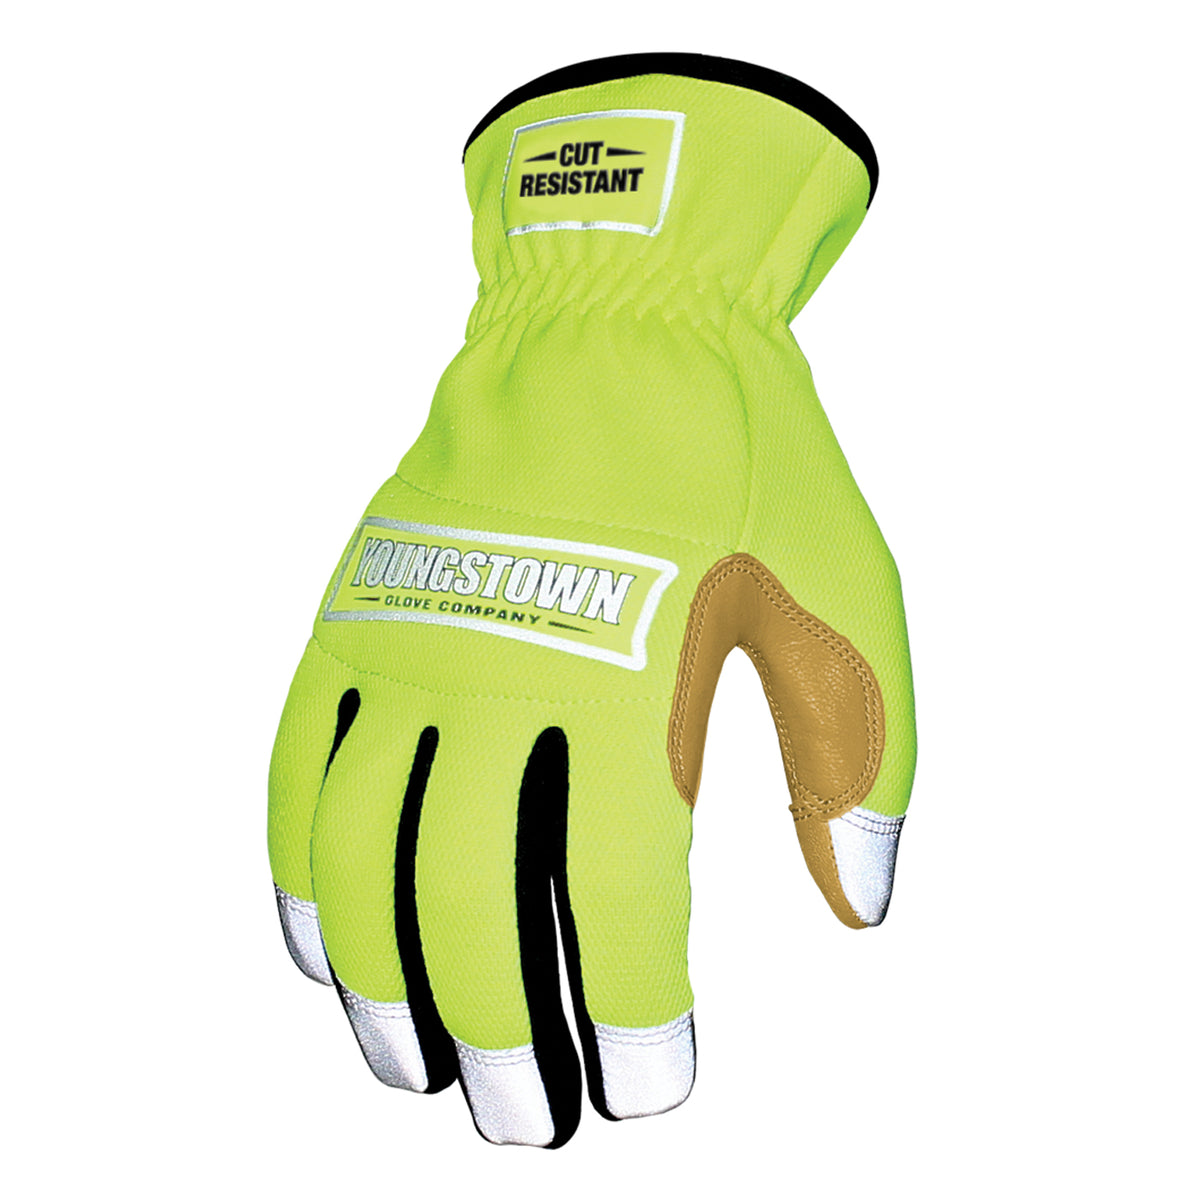 Cut Resistant Safety Lime Hybrid Gloves - Large / 9